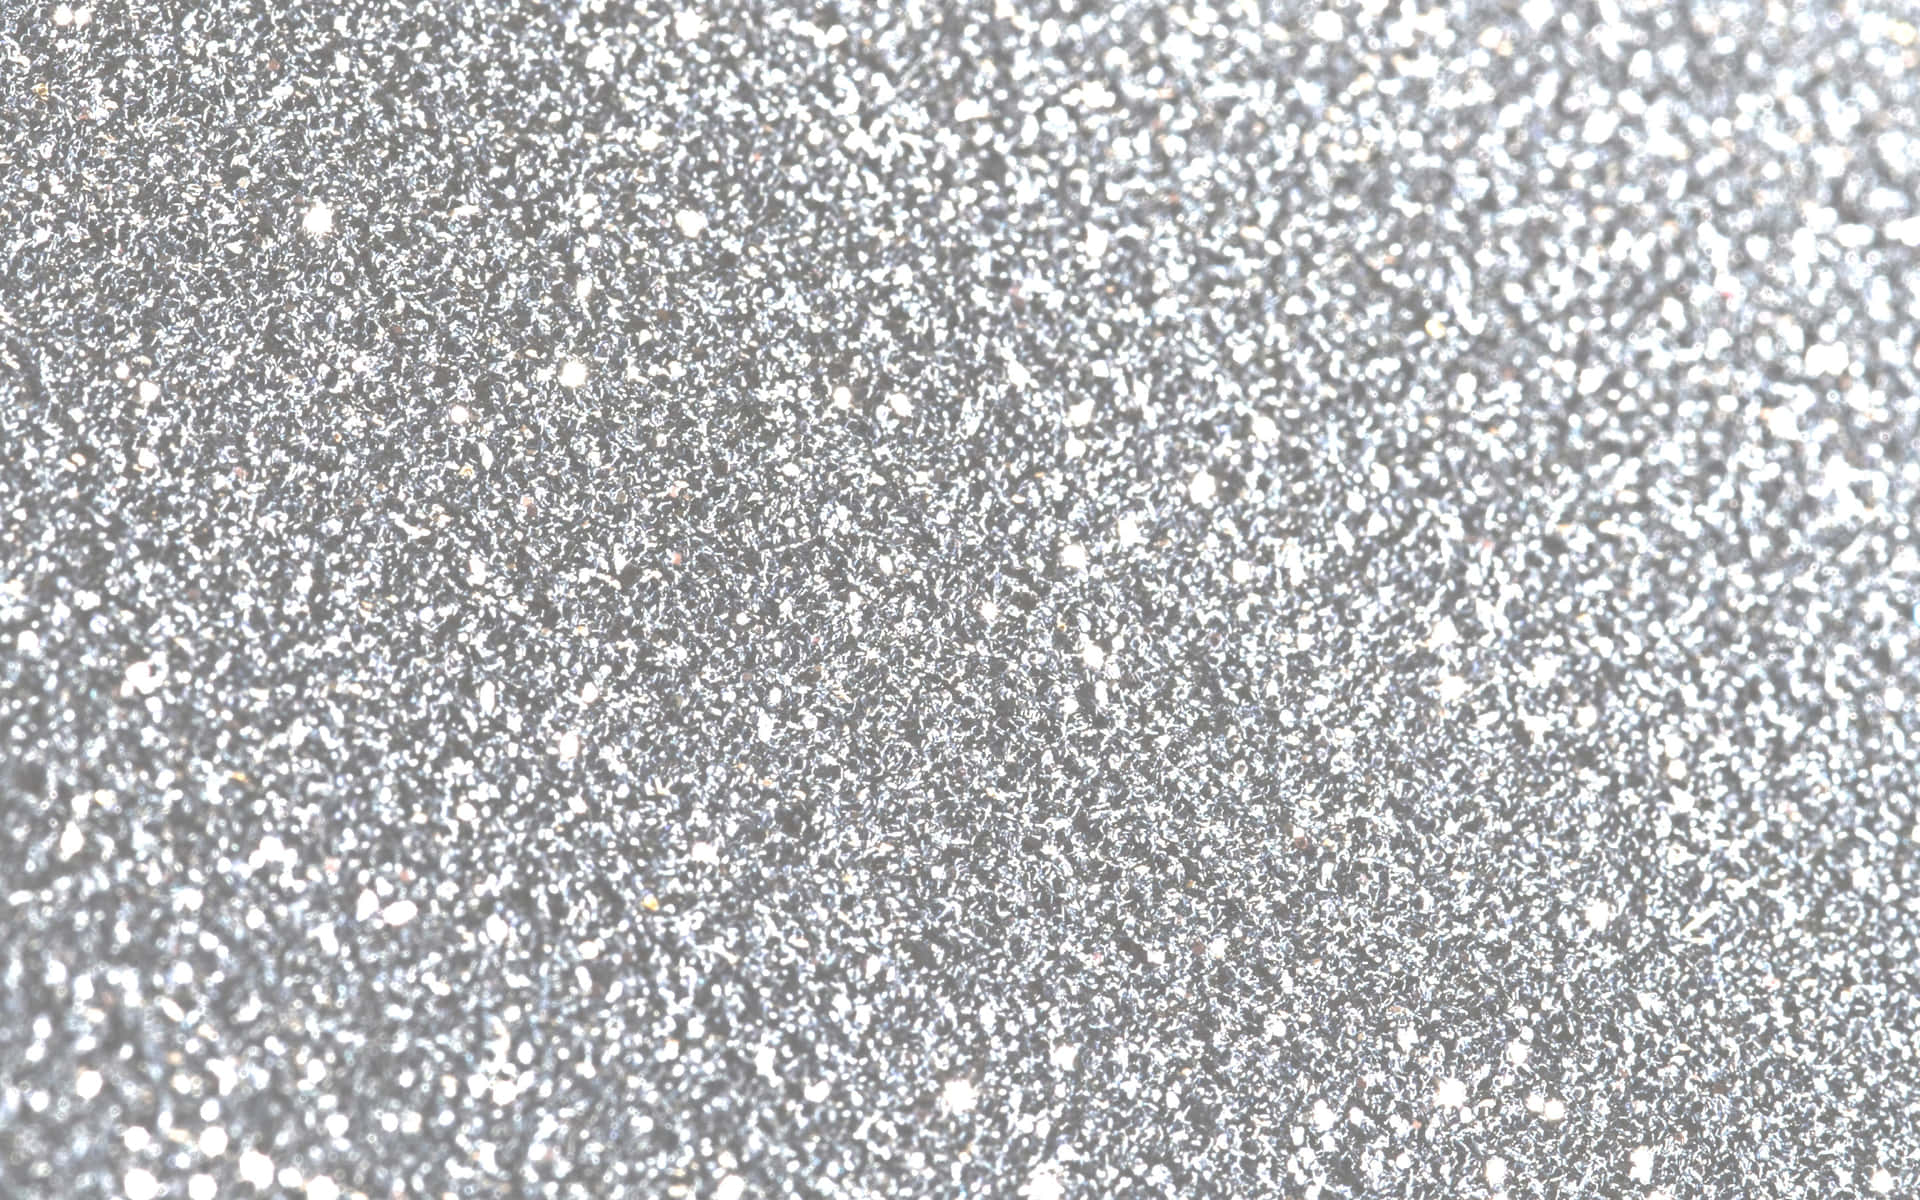 100+] Silver Glitter Backgrounds